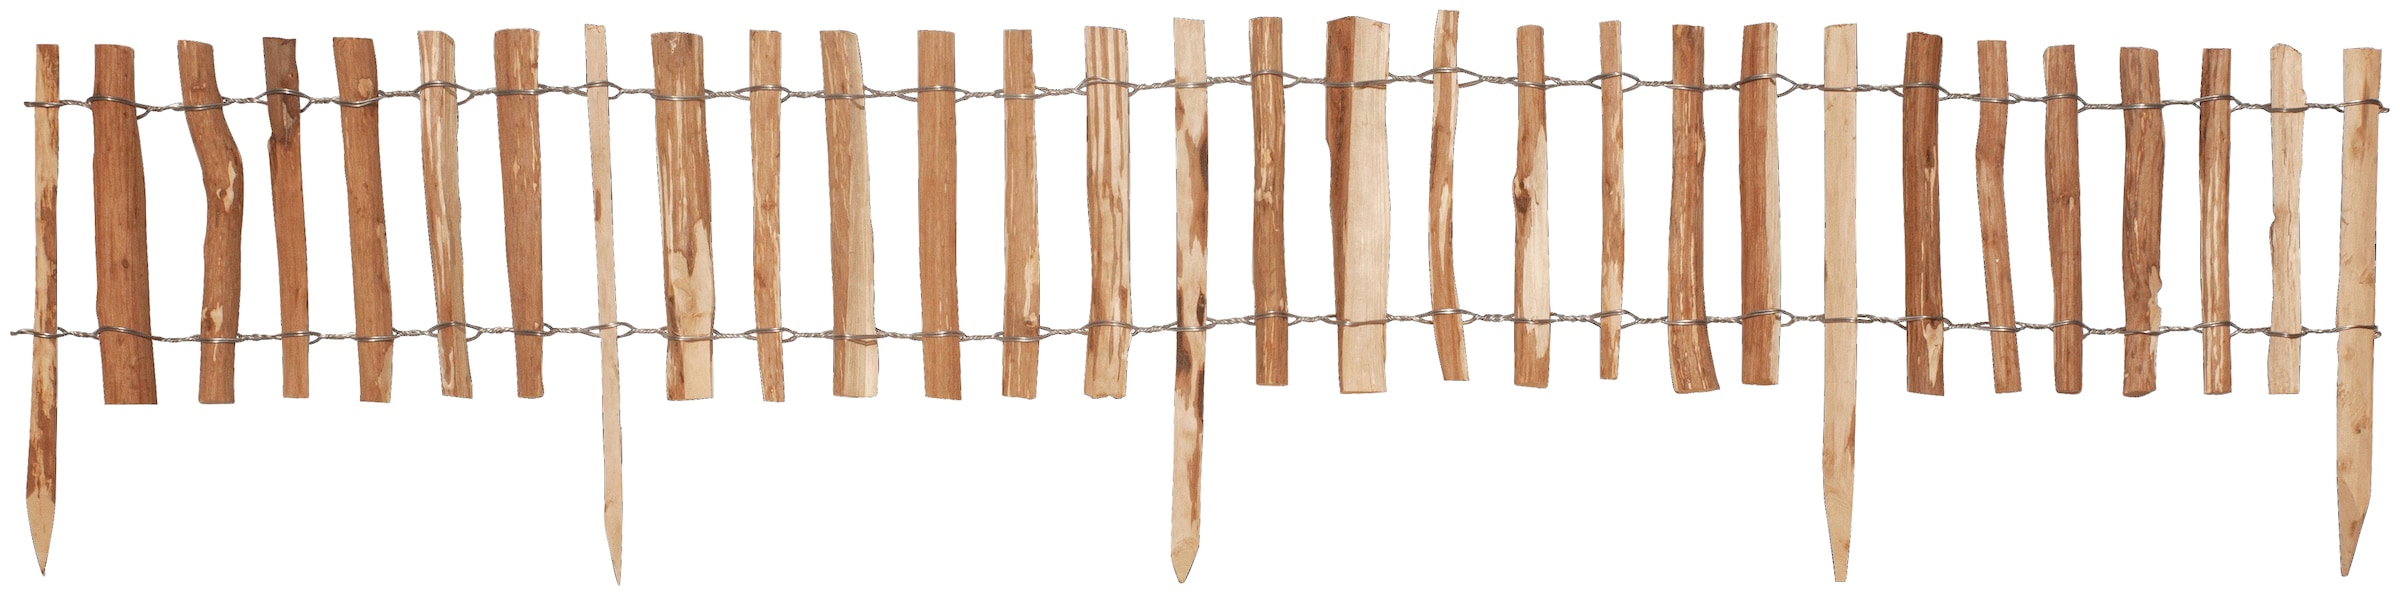 Kiehn-Holz Beetumrandung »Mini-Haselnuss-Beetgrenze«, Abstand 3-4 cm